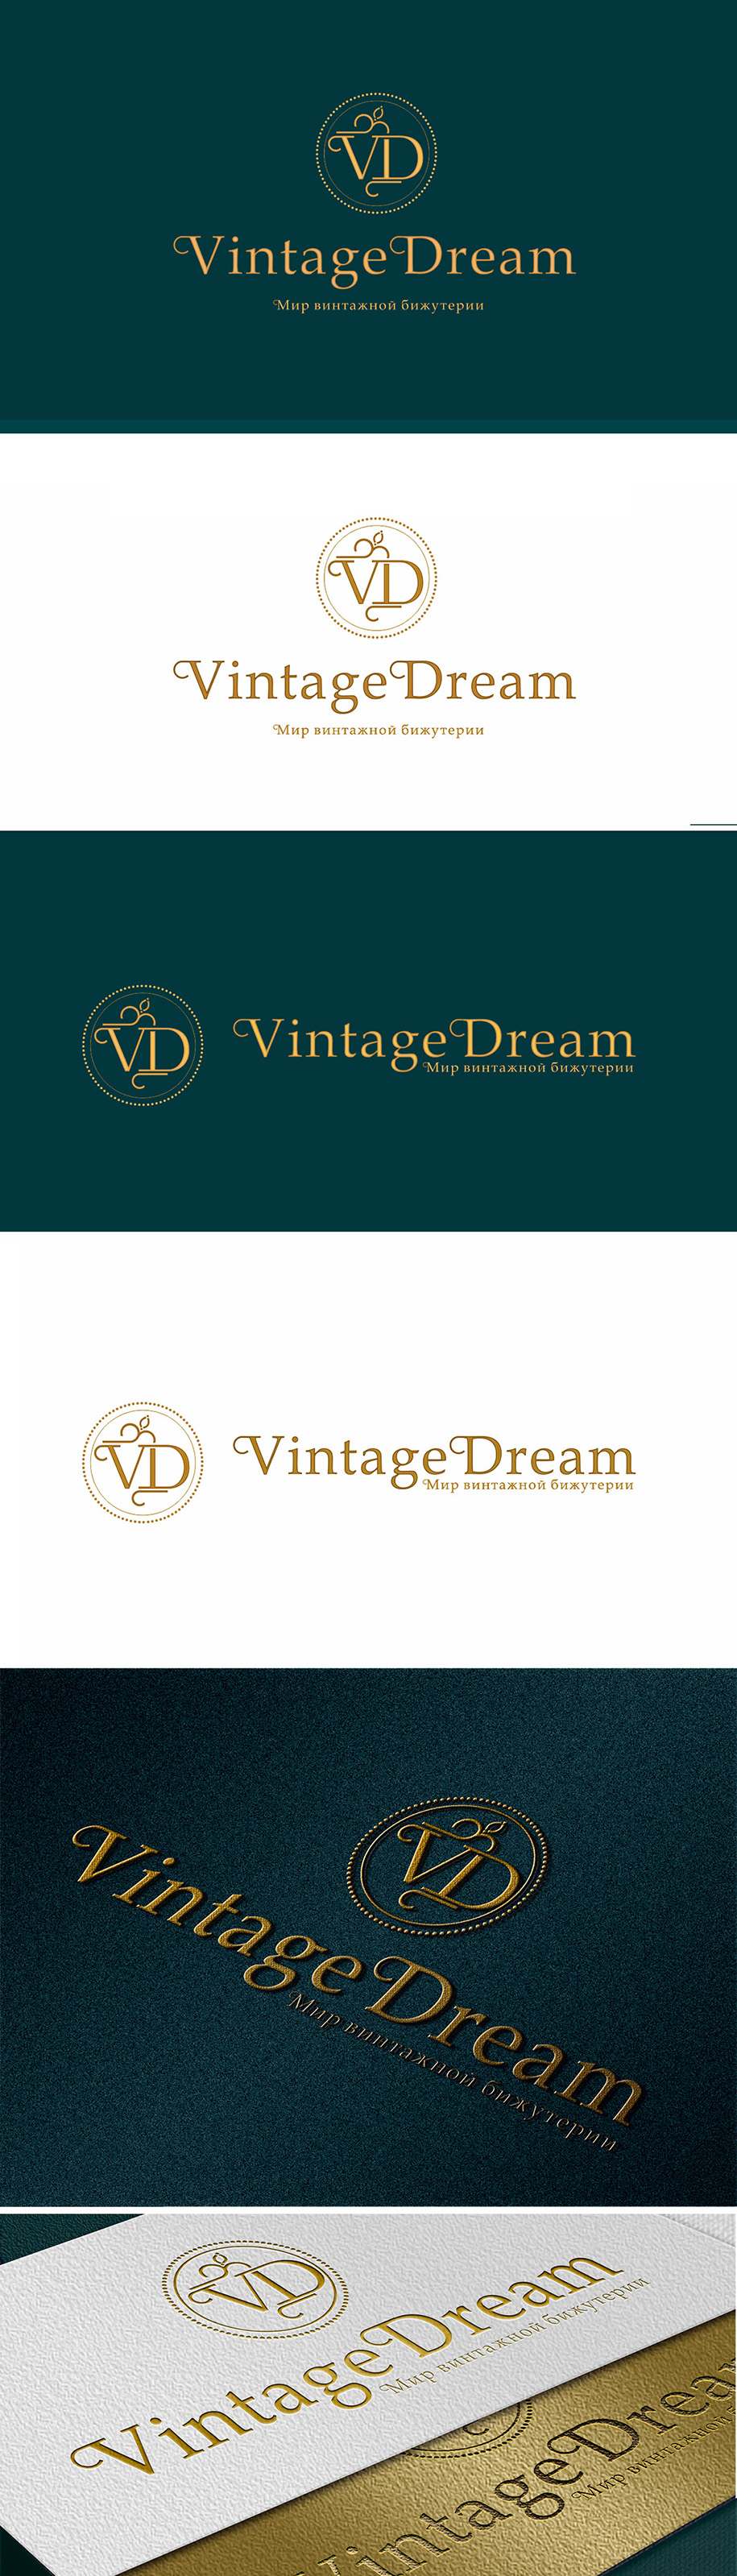 "Vintage Dream" - продажа винтажной бижутерии